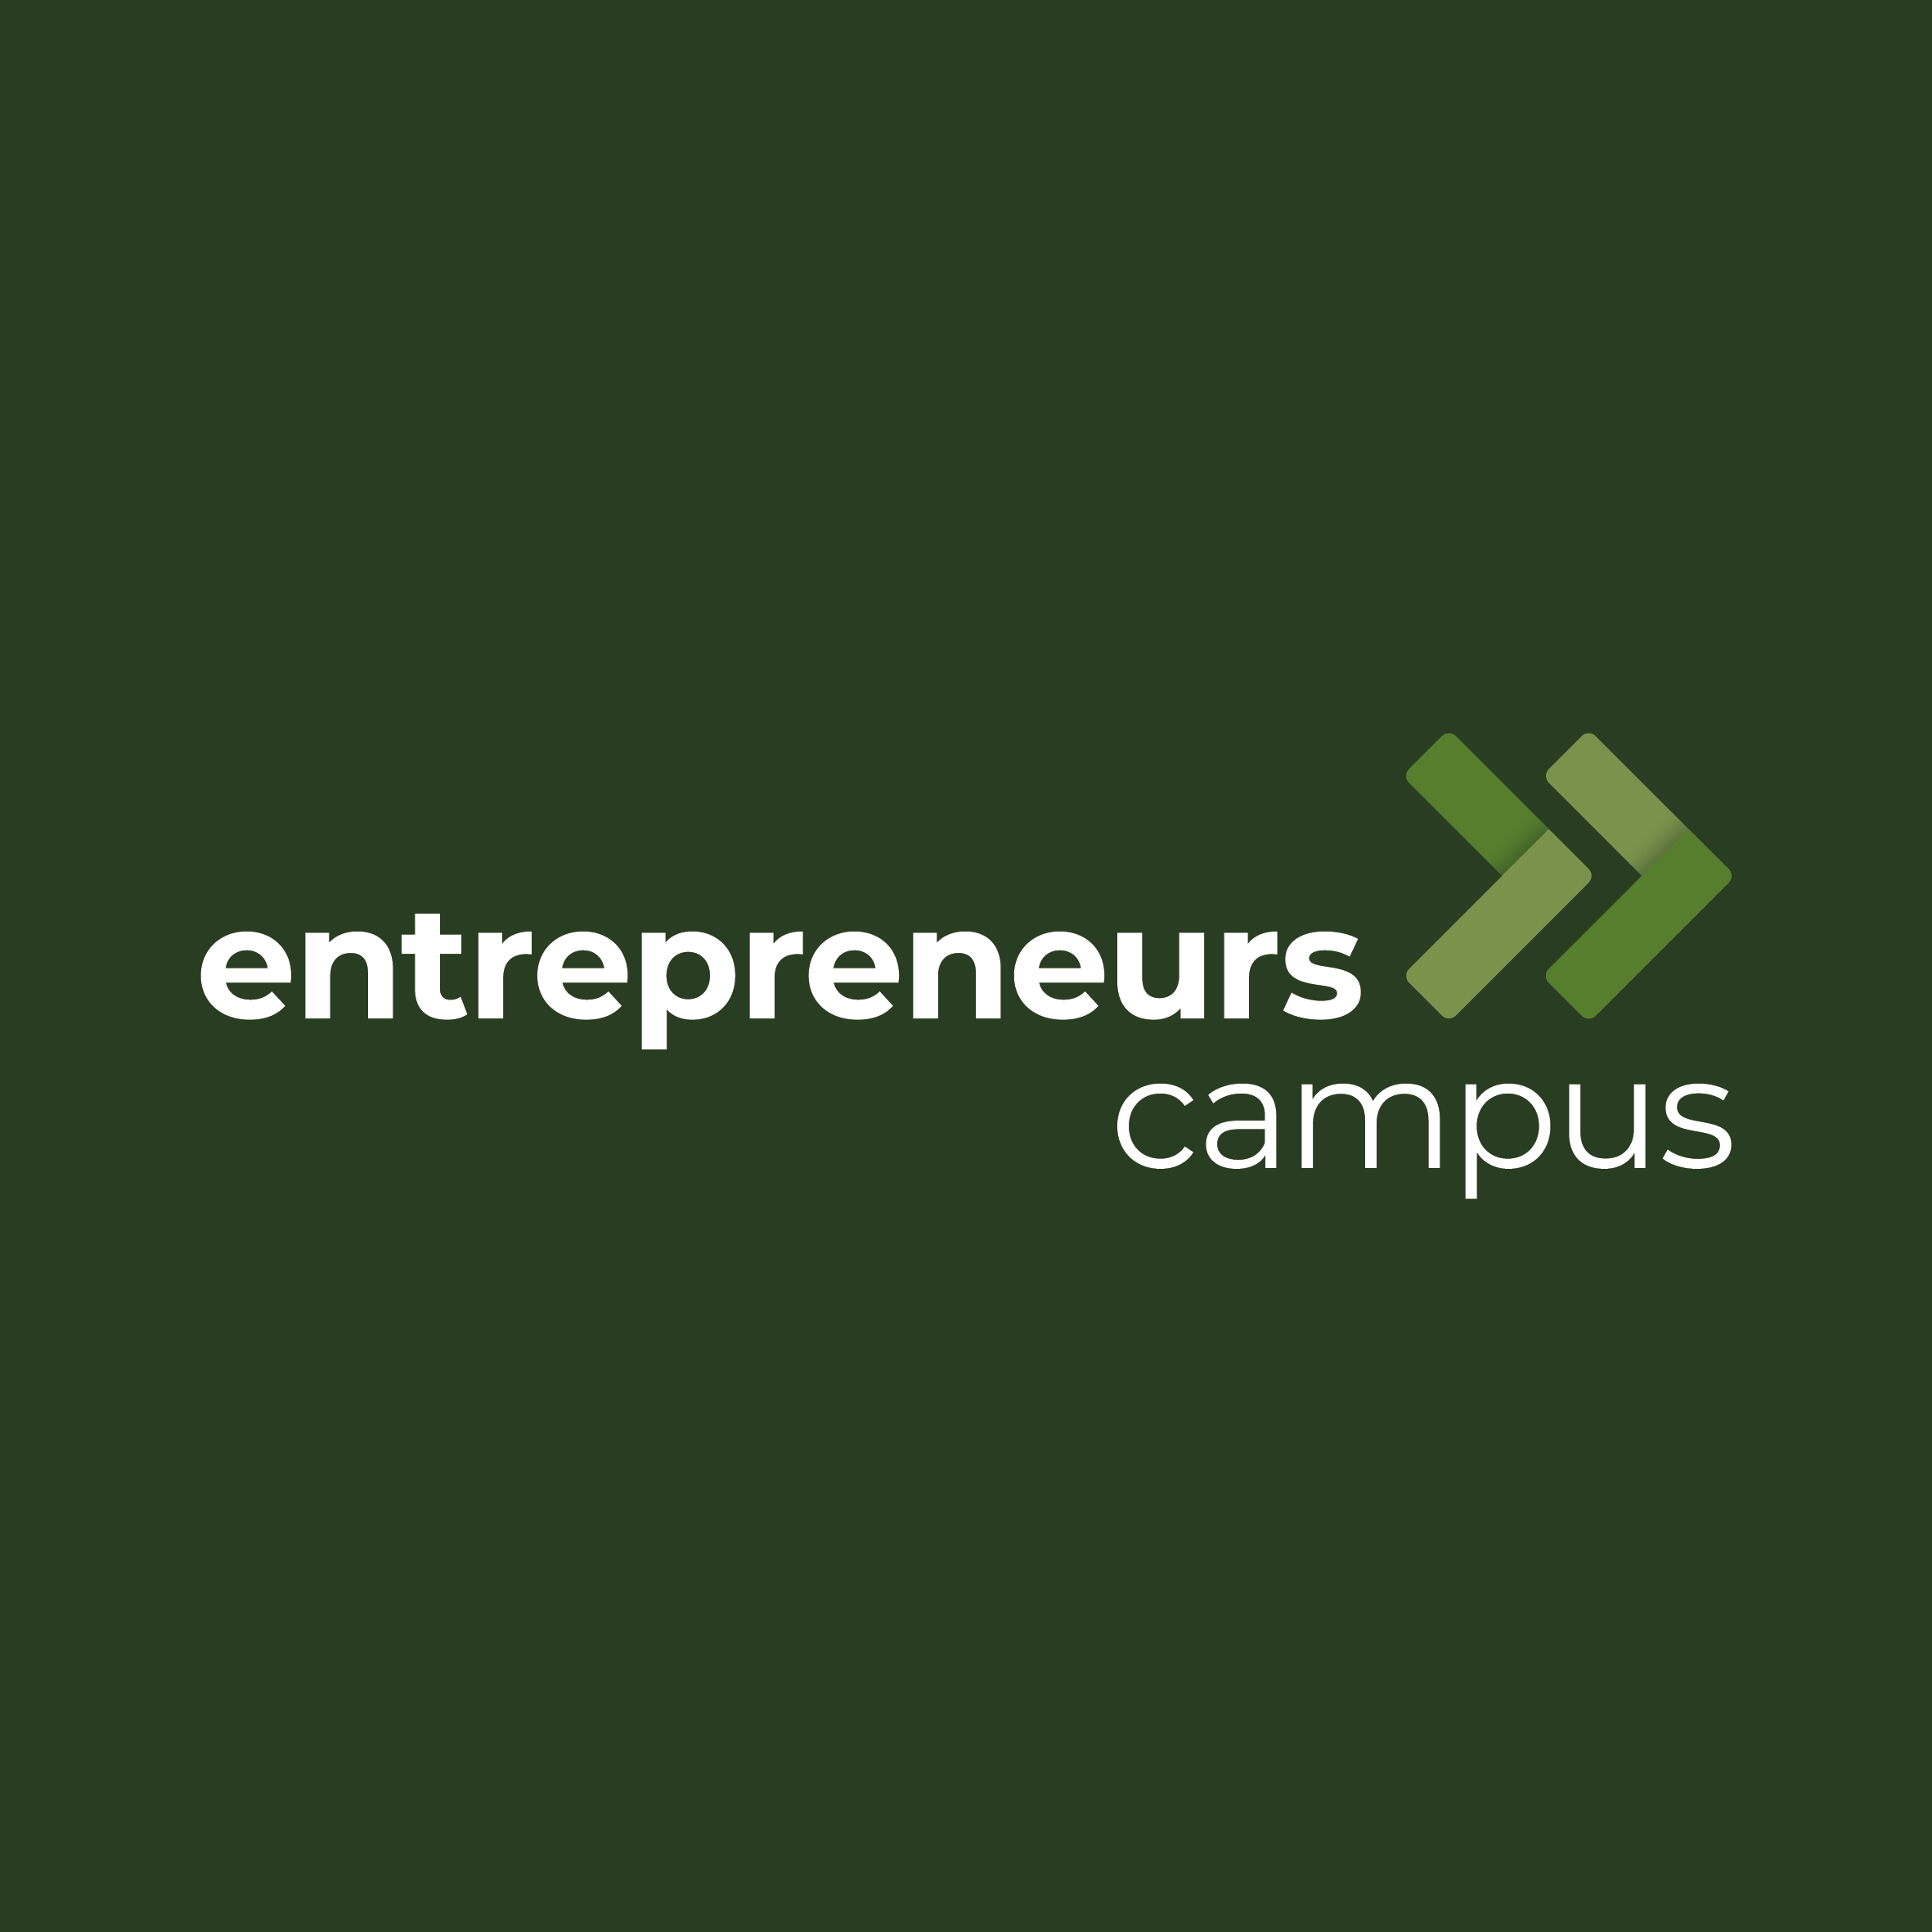 Entrepreneurs Campus Universität Ulm